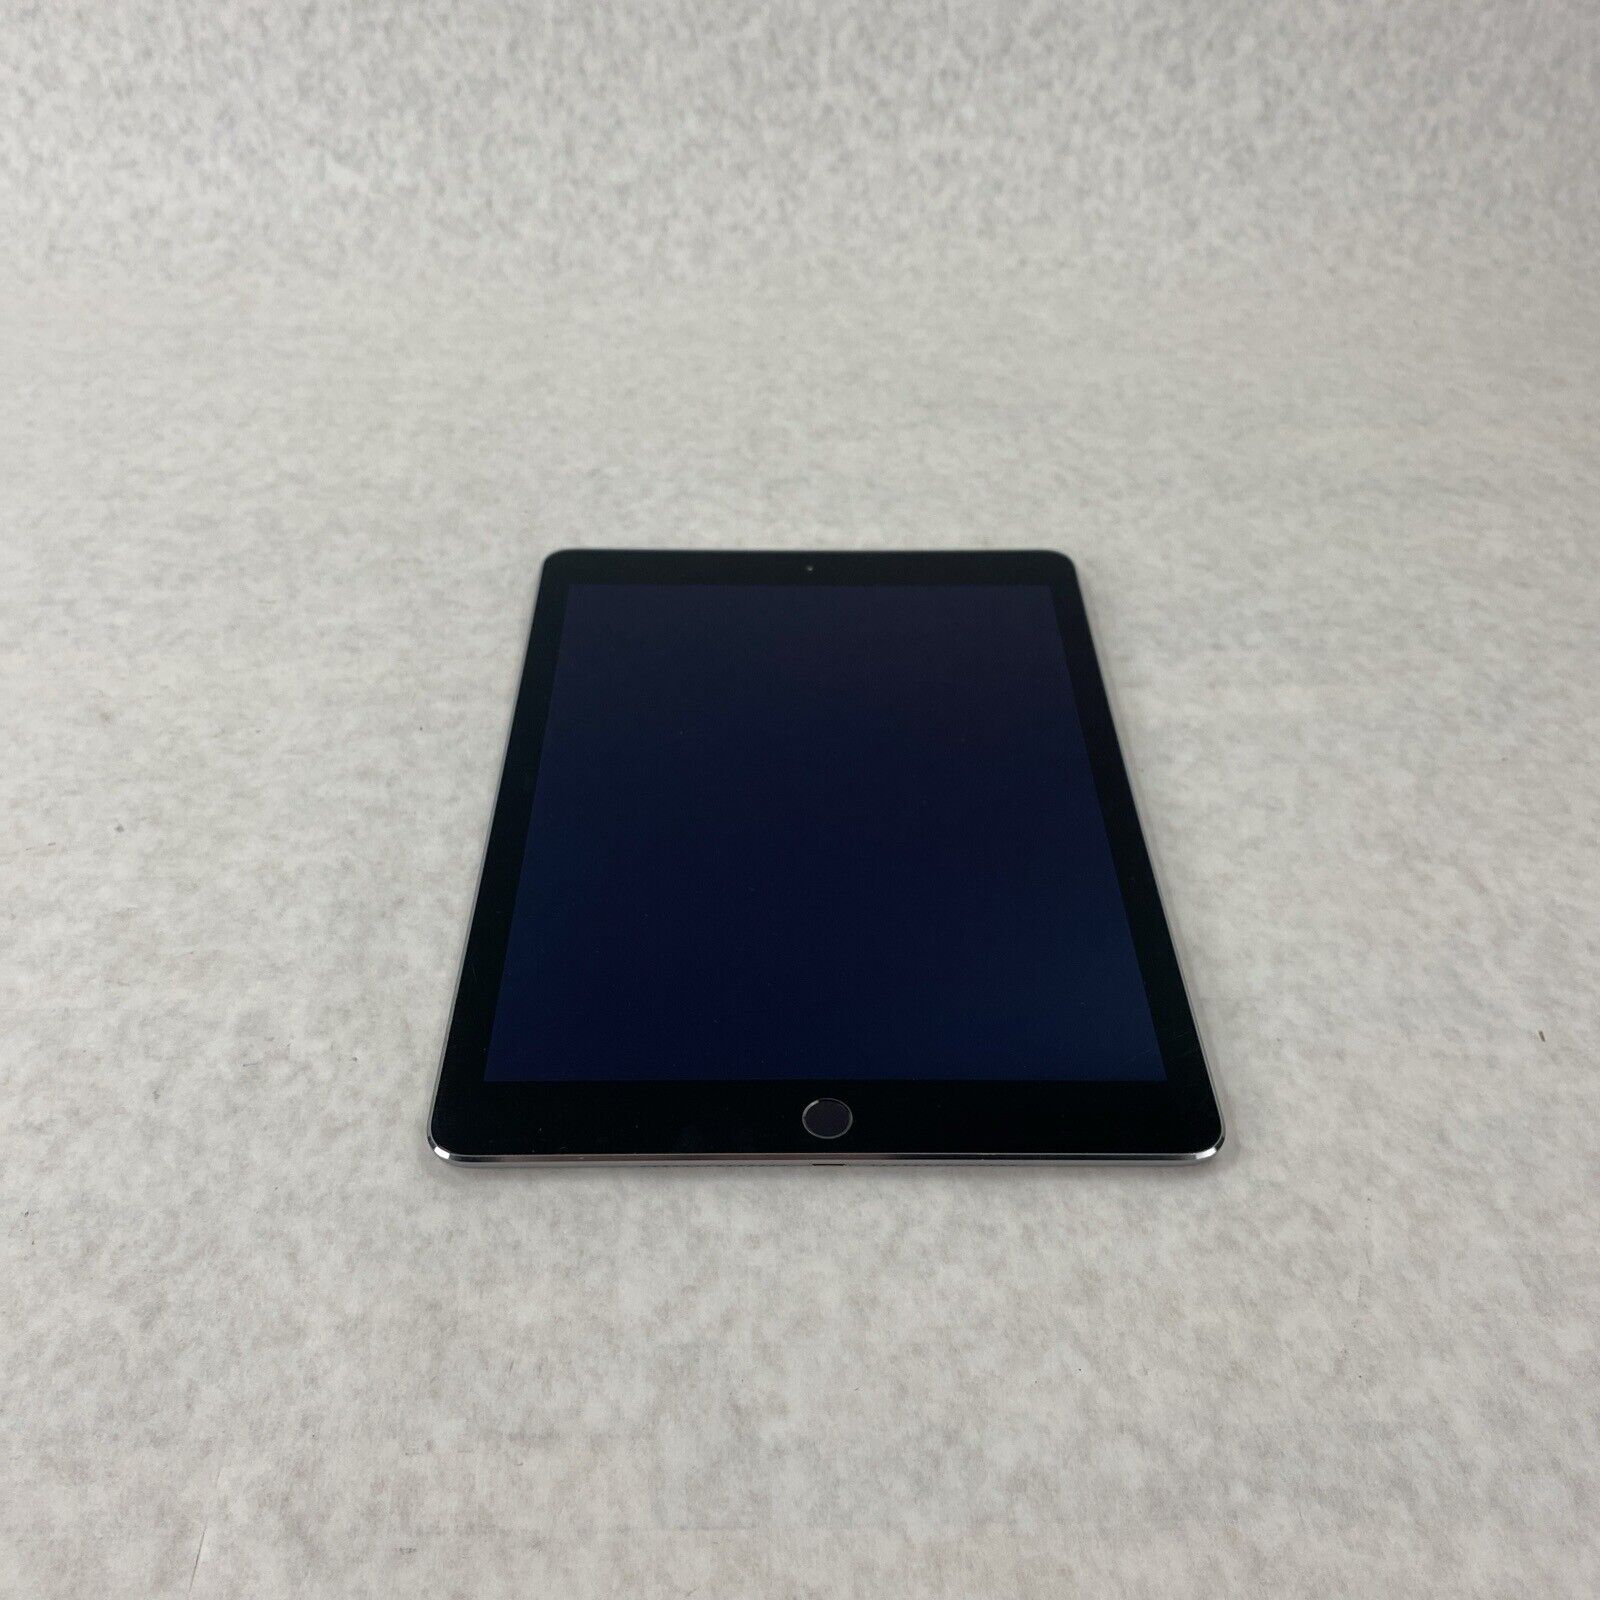 Apple iPad Air 2 A1566 9.7" 64GB Wi-Fi Space Gray - Tested